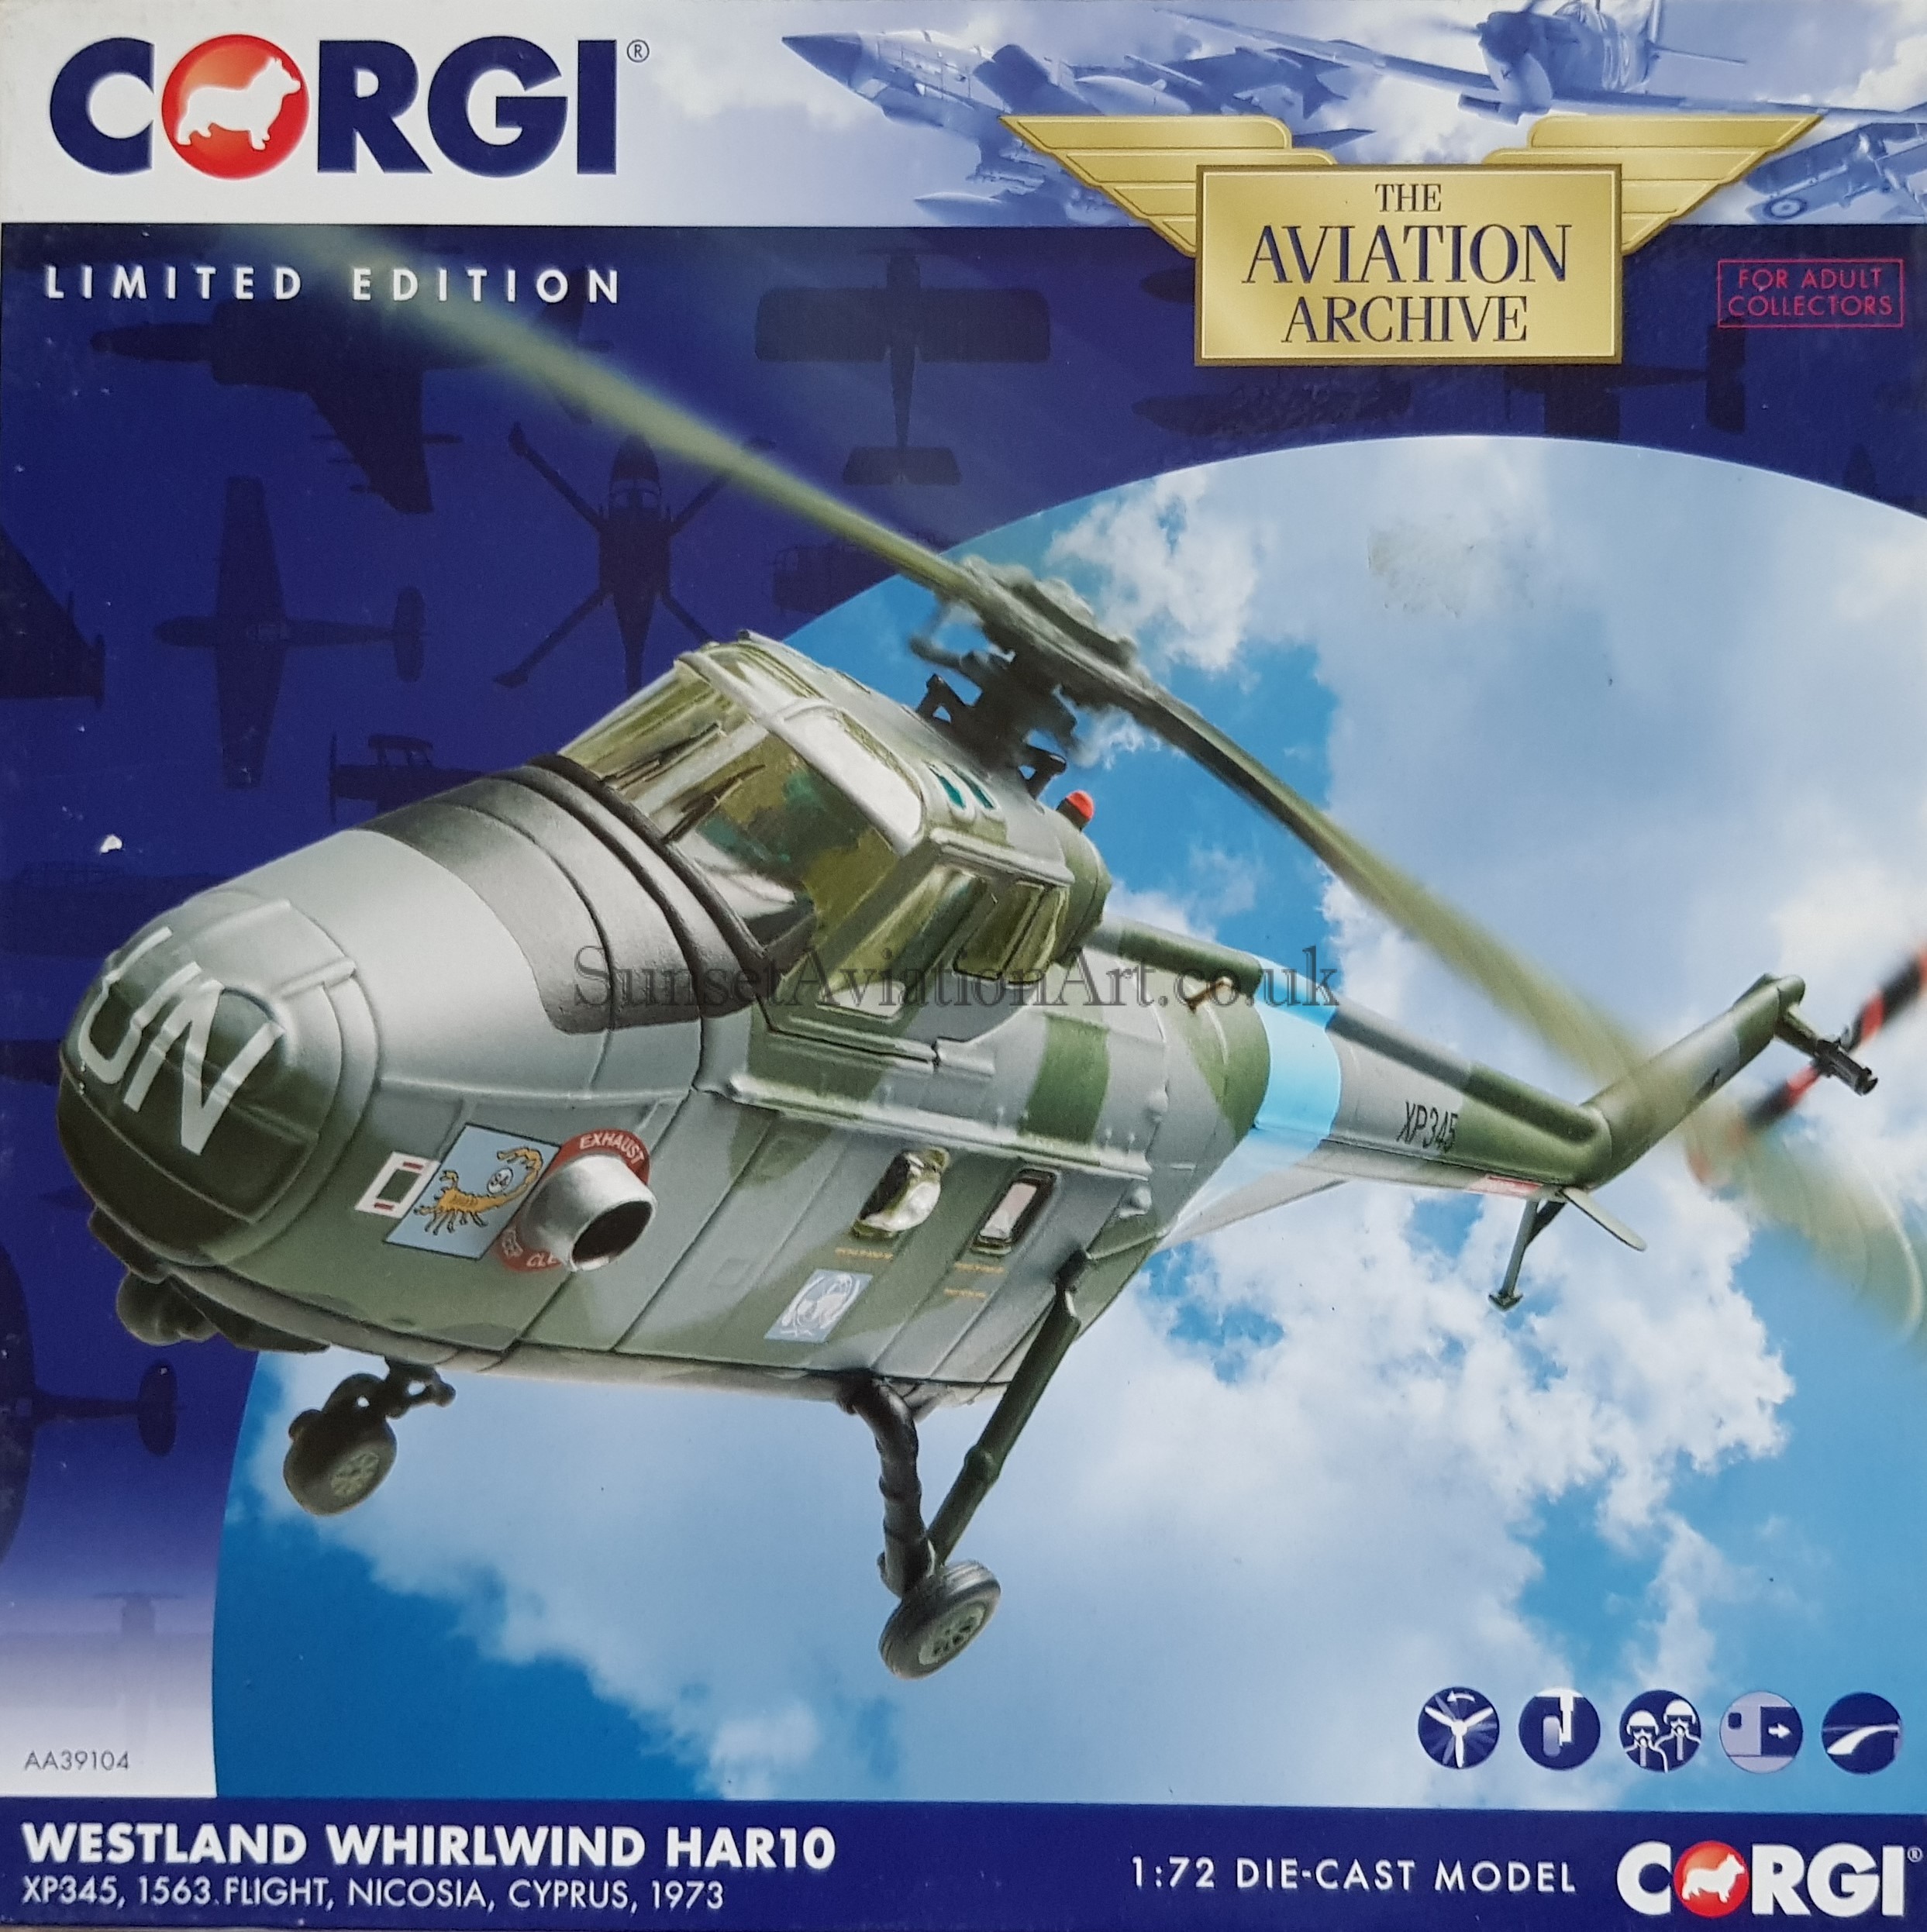 CORGI WESTLAND WHIRLWIND HELICOPTER HAR10 AA39104 MODEL 1:72 AVIATION ARCHIVE K8 